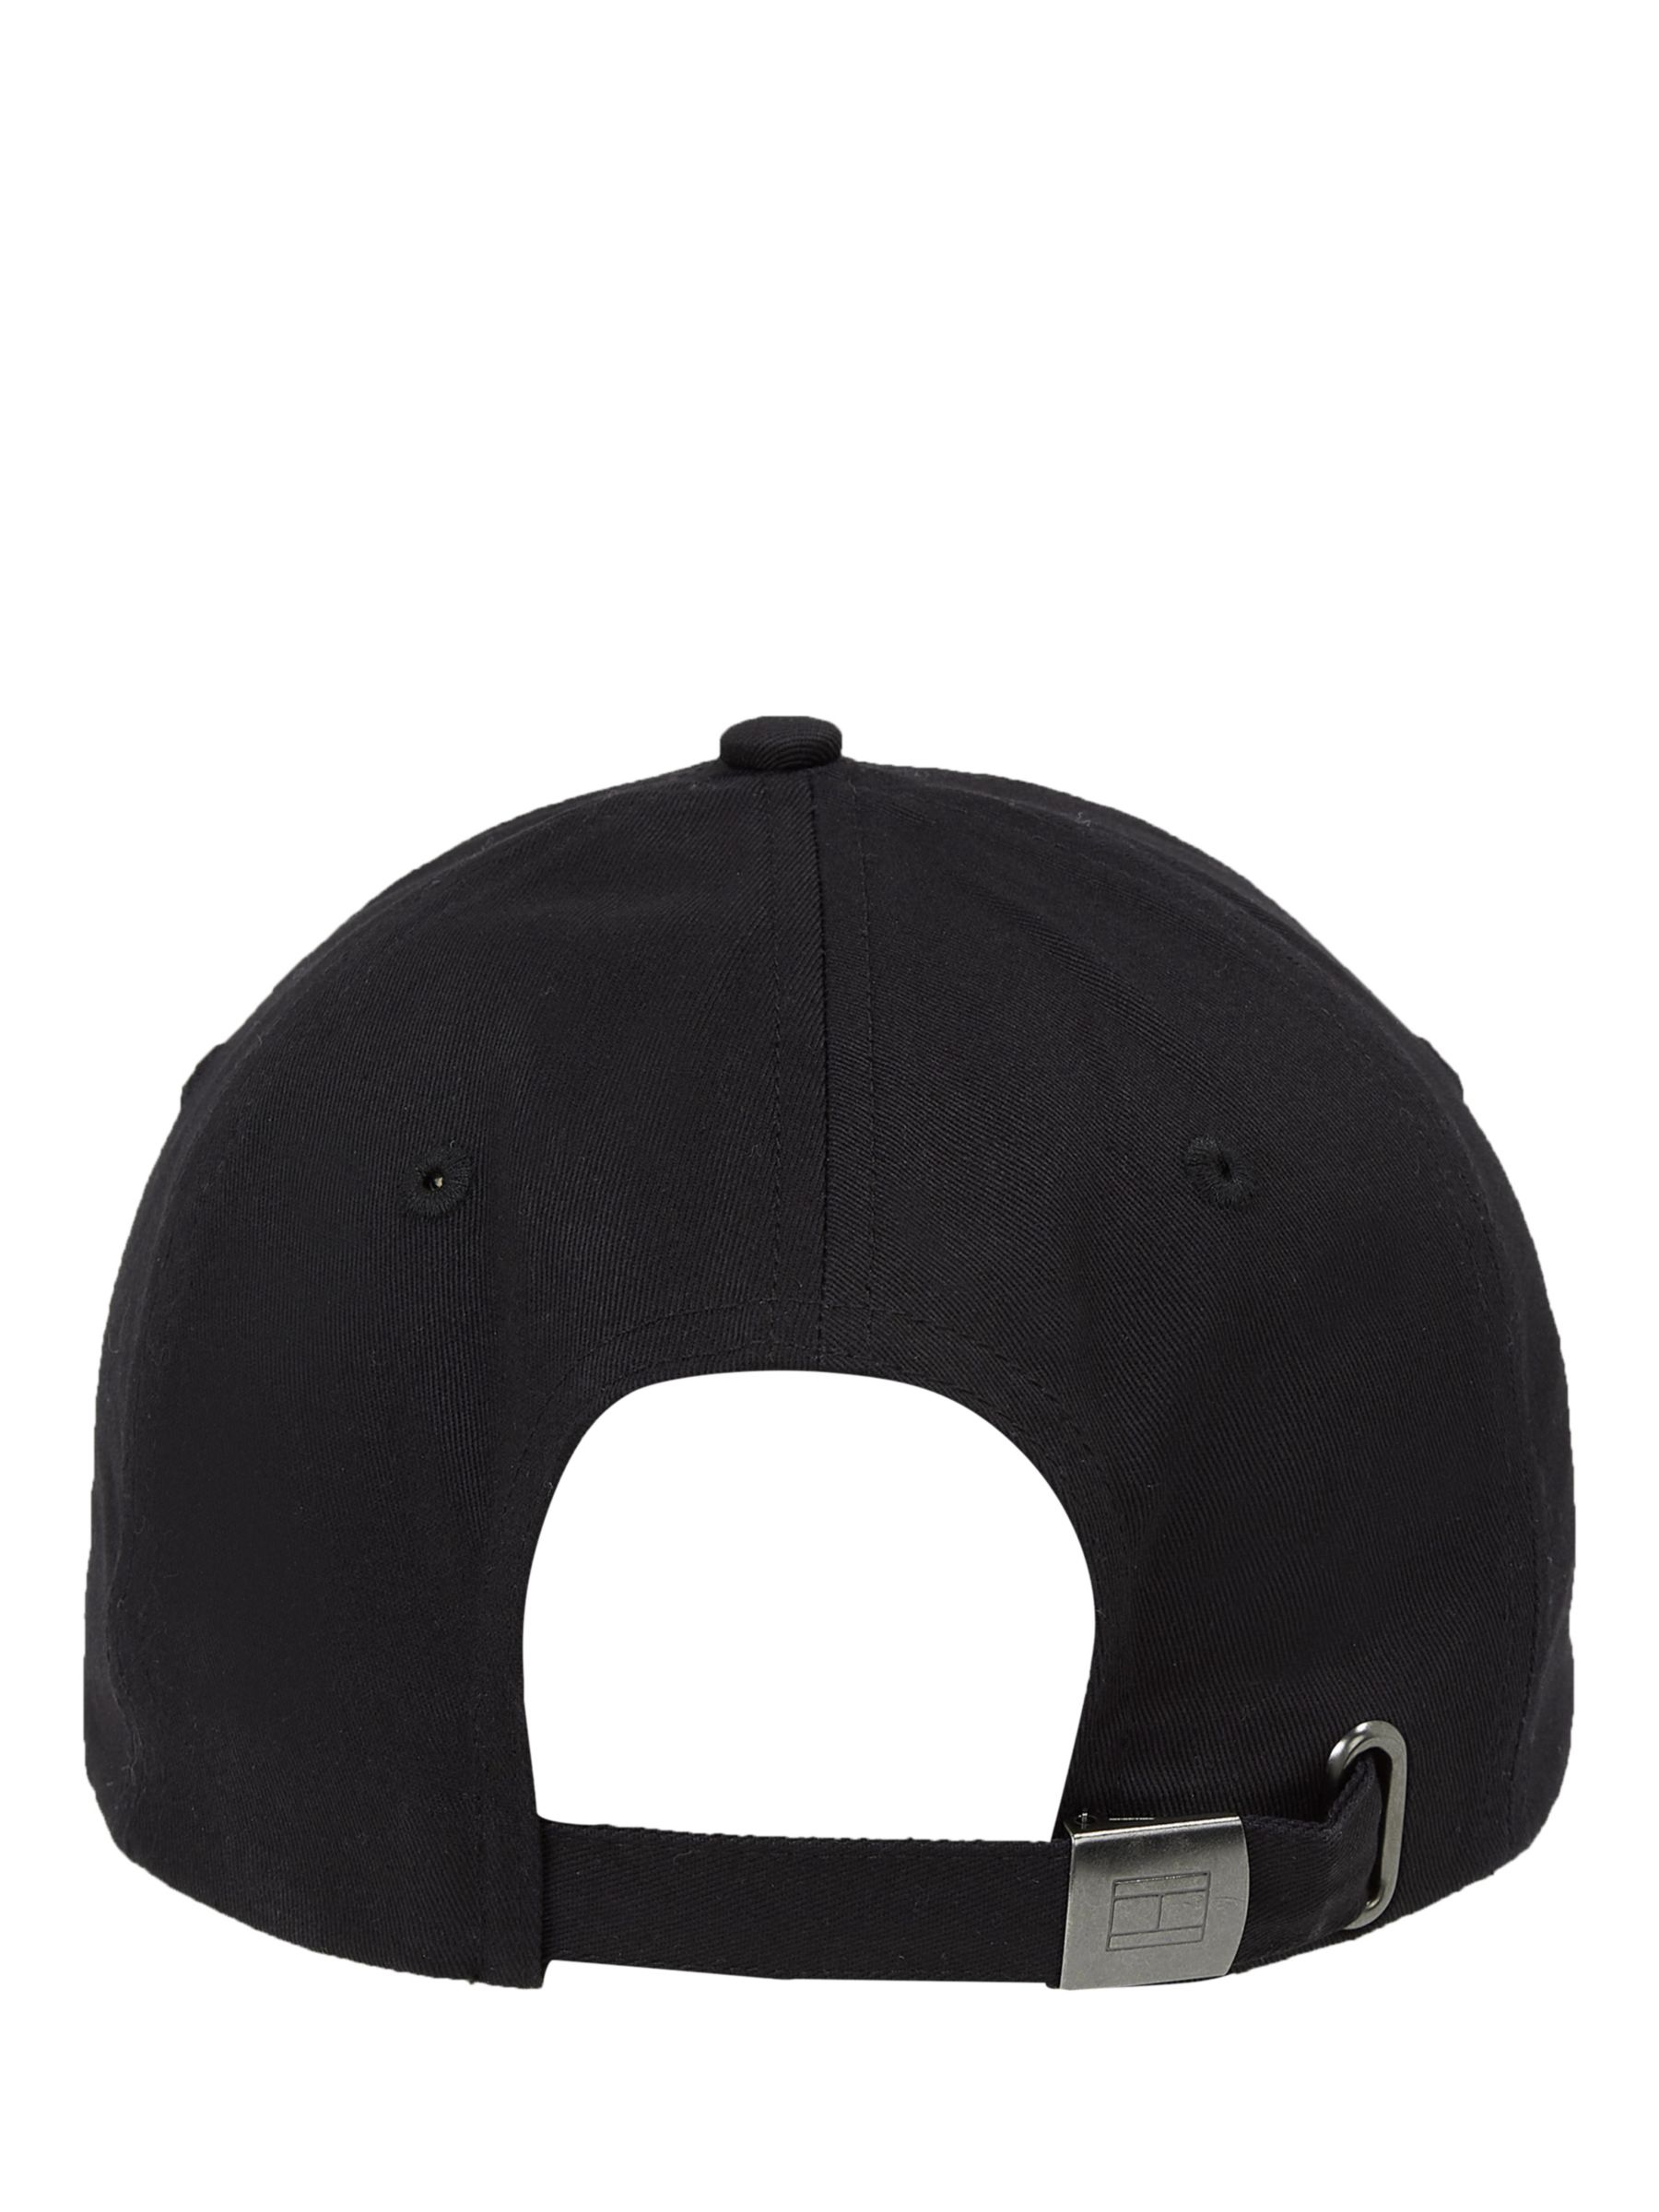 Tommy Hilfiger Plain Logo Hat, Black, One Size